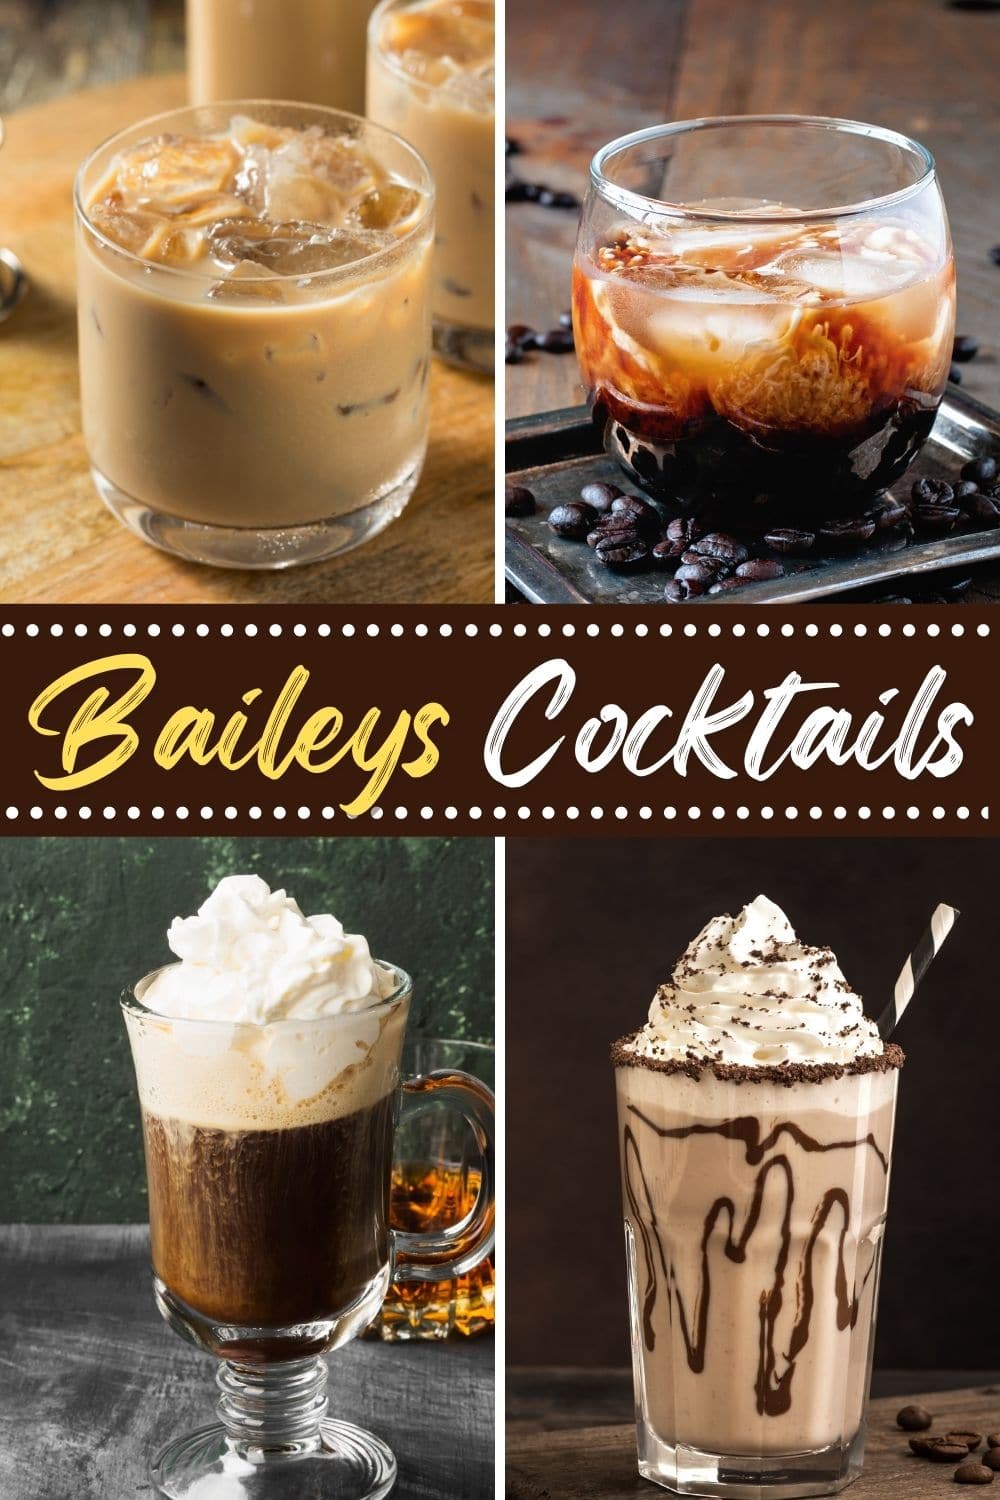 Bailey's Irish Cream - Indulge in a Classic Liqueur for Divine Cocktails